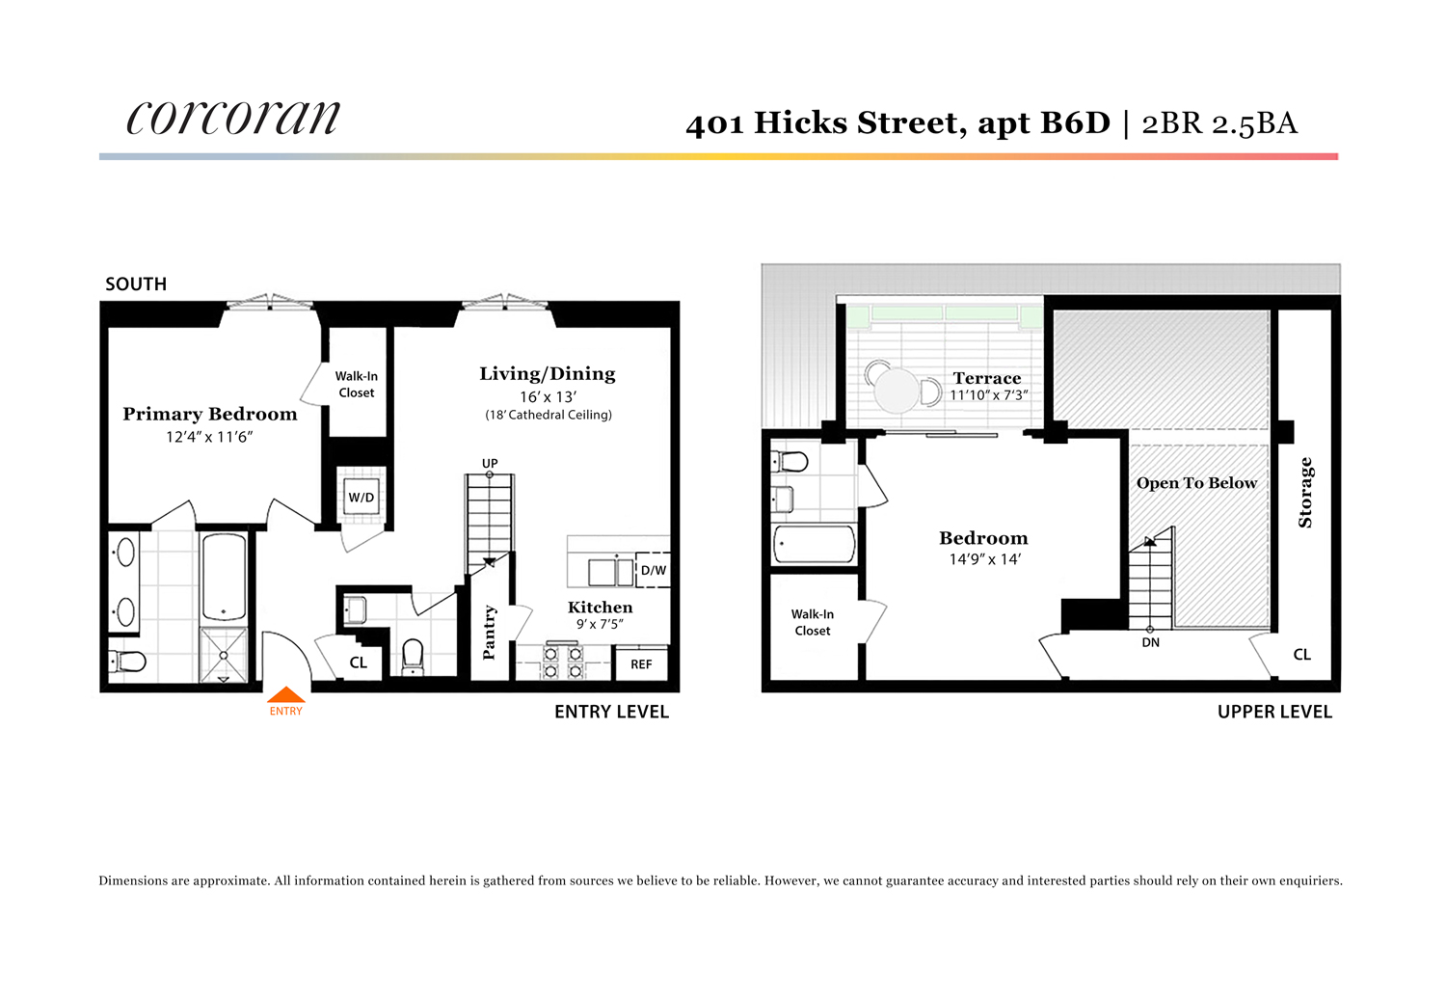 Floorplan for 401 Hicks Street, B6D